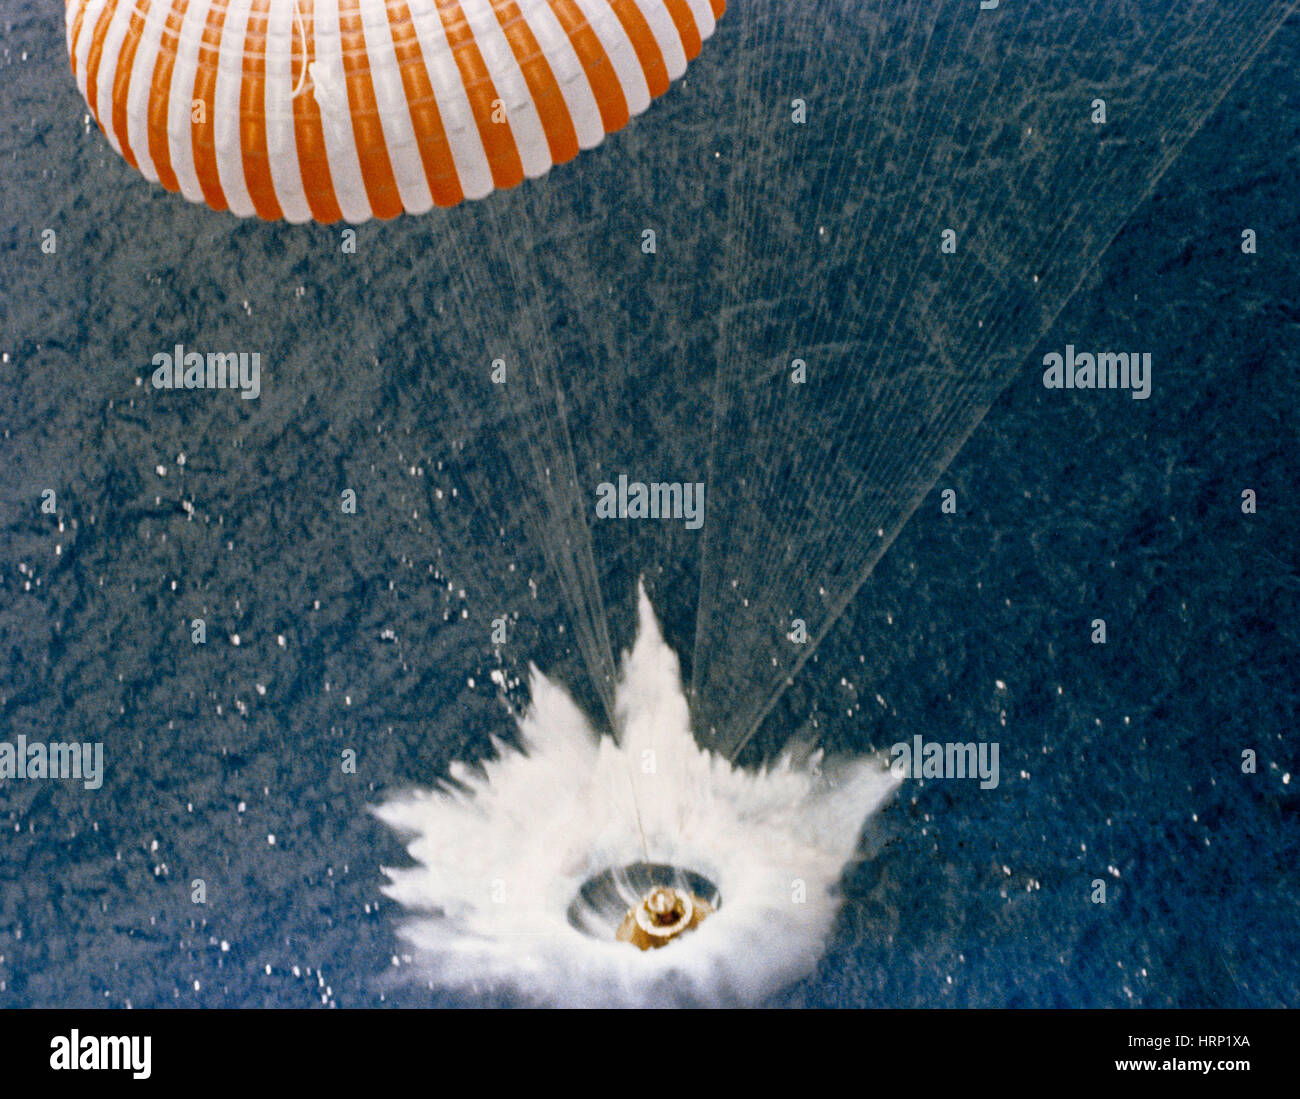 Apollo 15 Command Module Splashdown Stock Photo